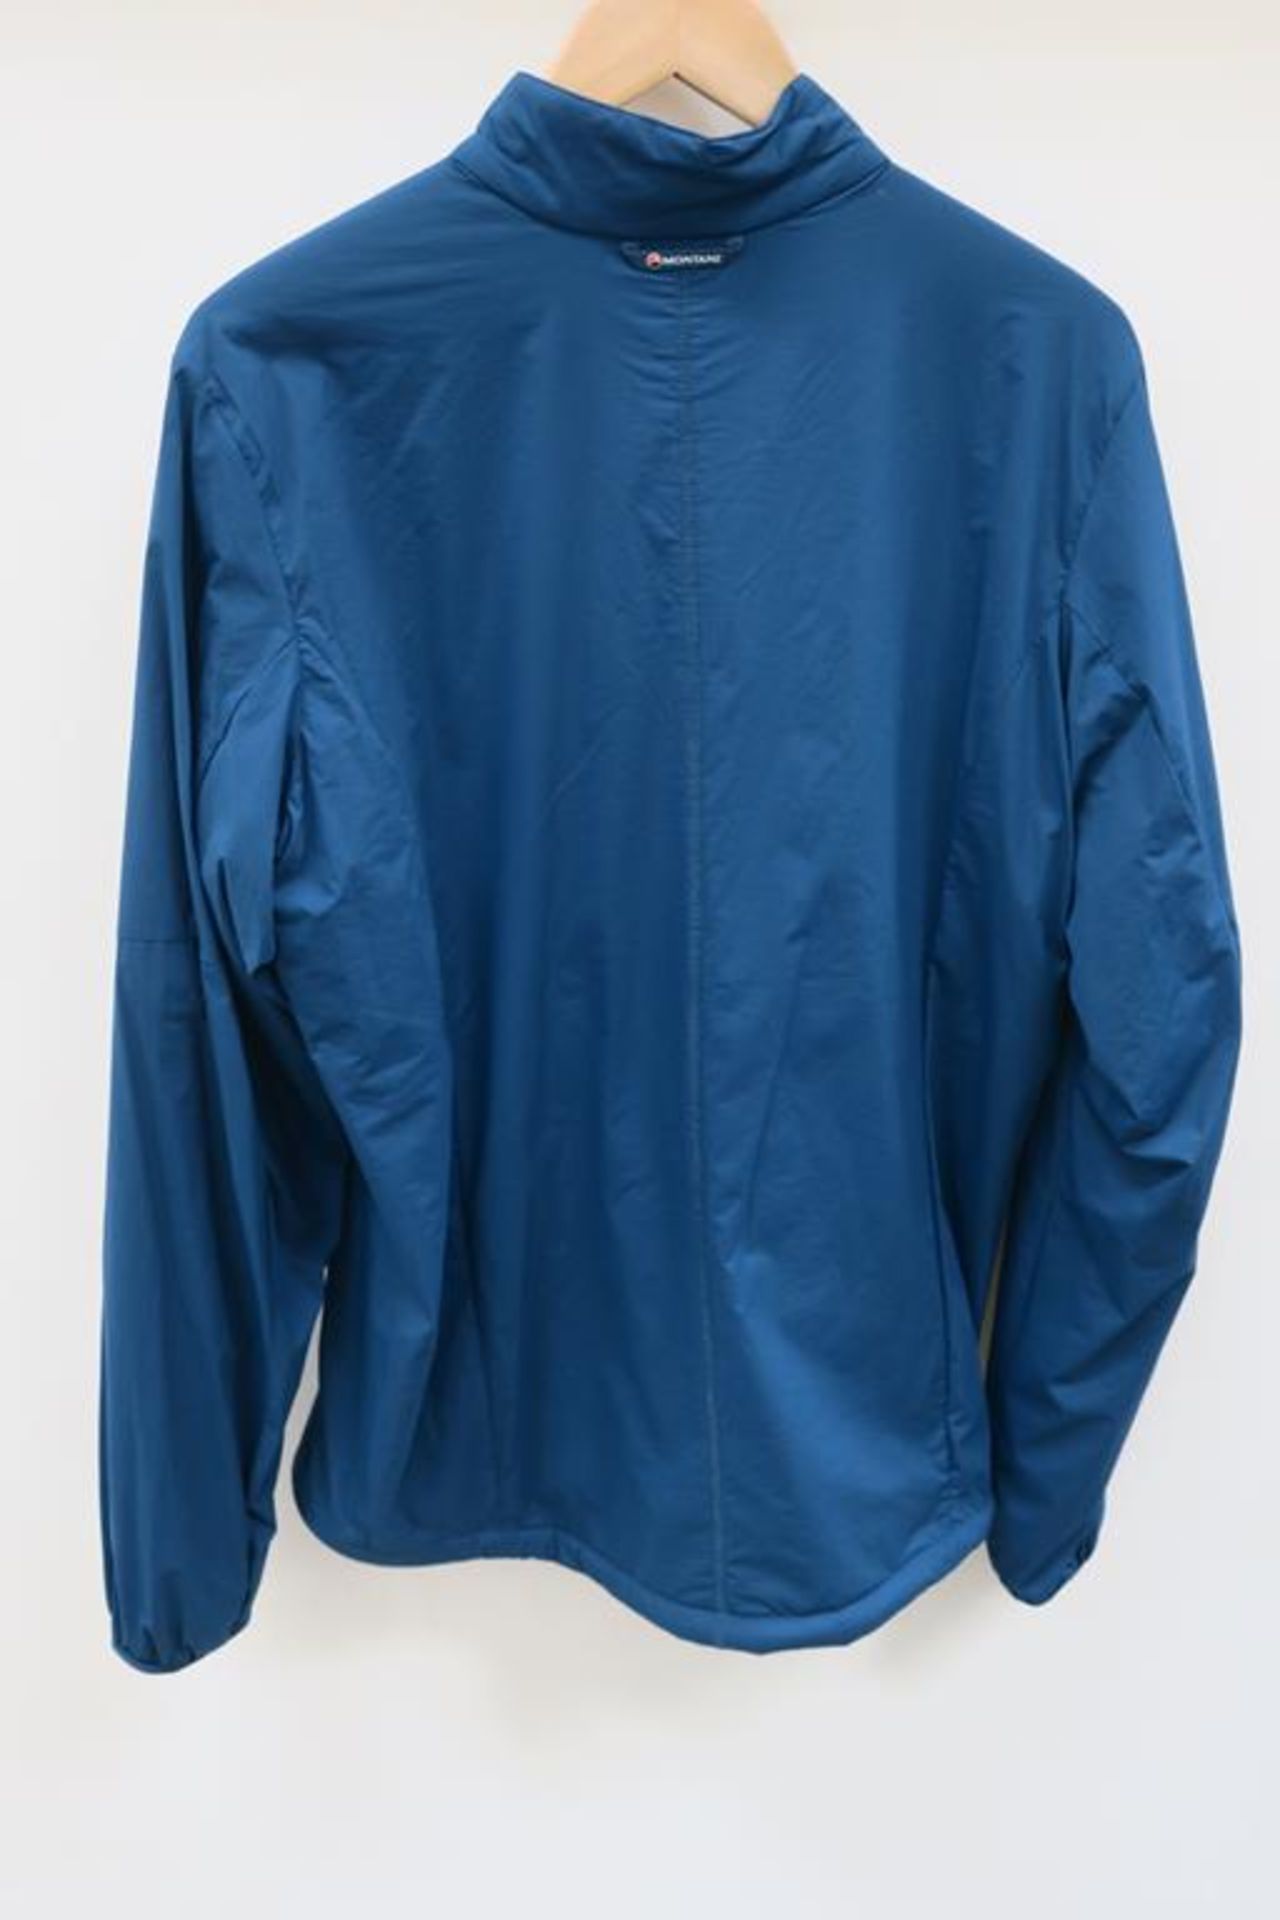 Montane Ember Pull-On Mens Jacket in Narwhal Blue size Medium - Bild 2 aus 3